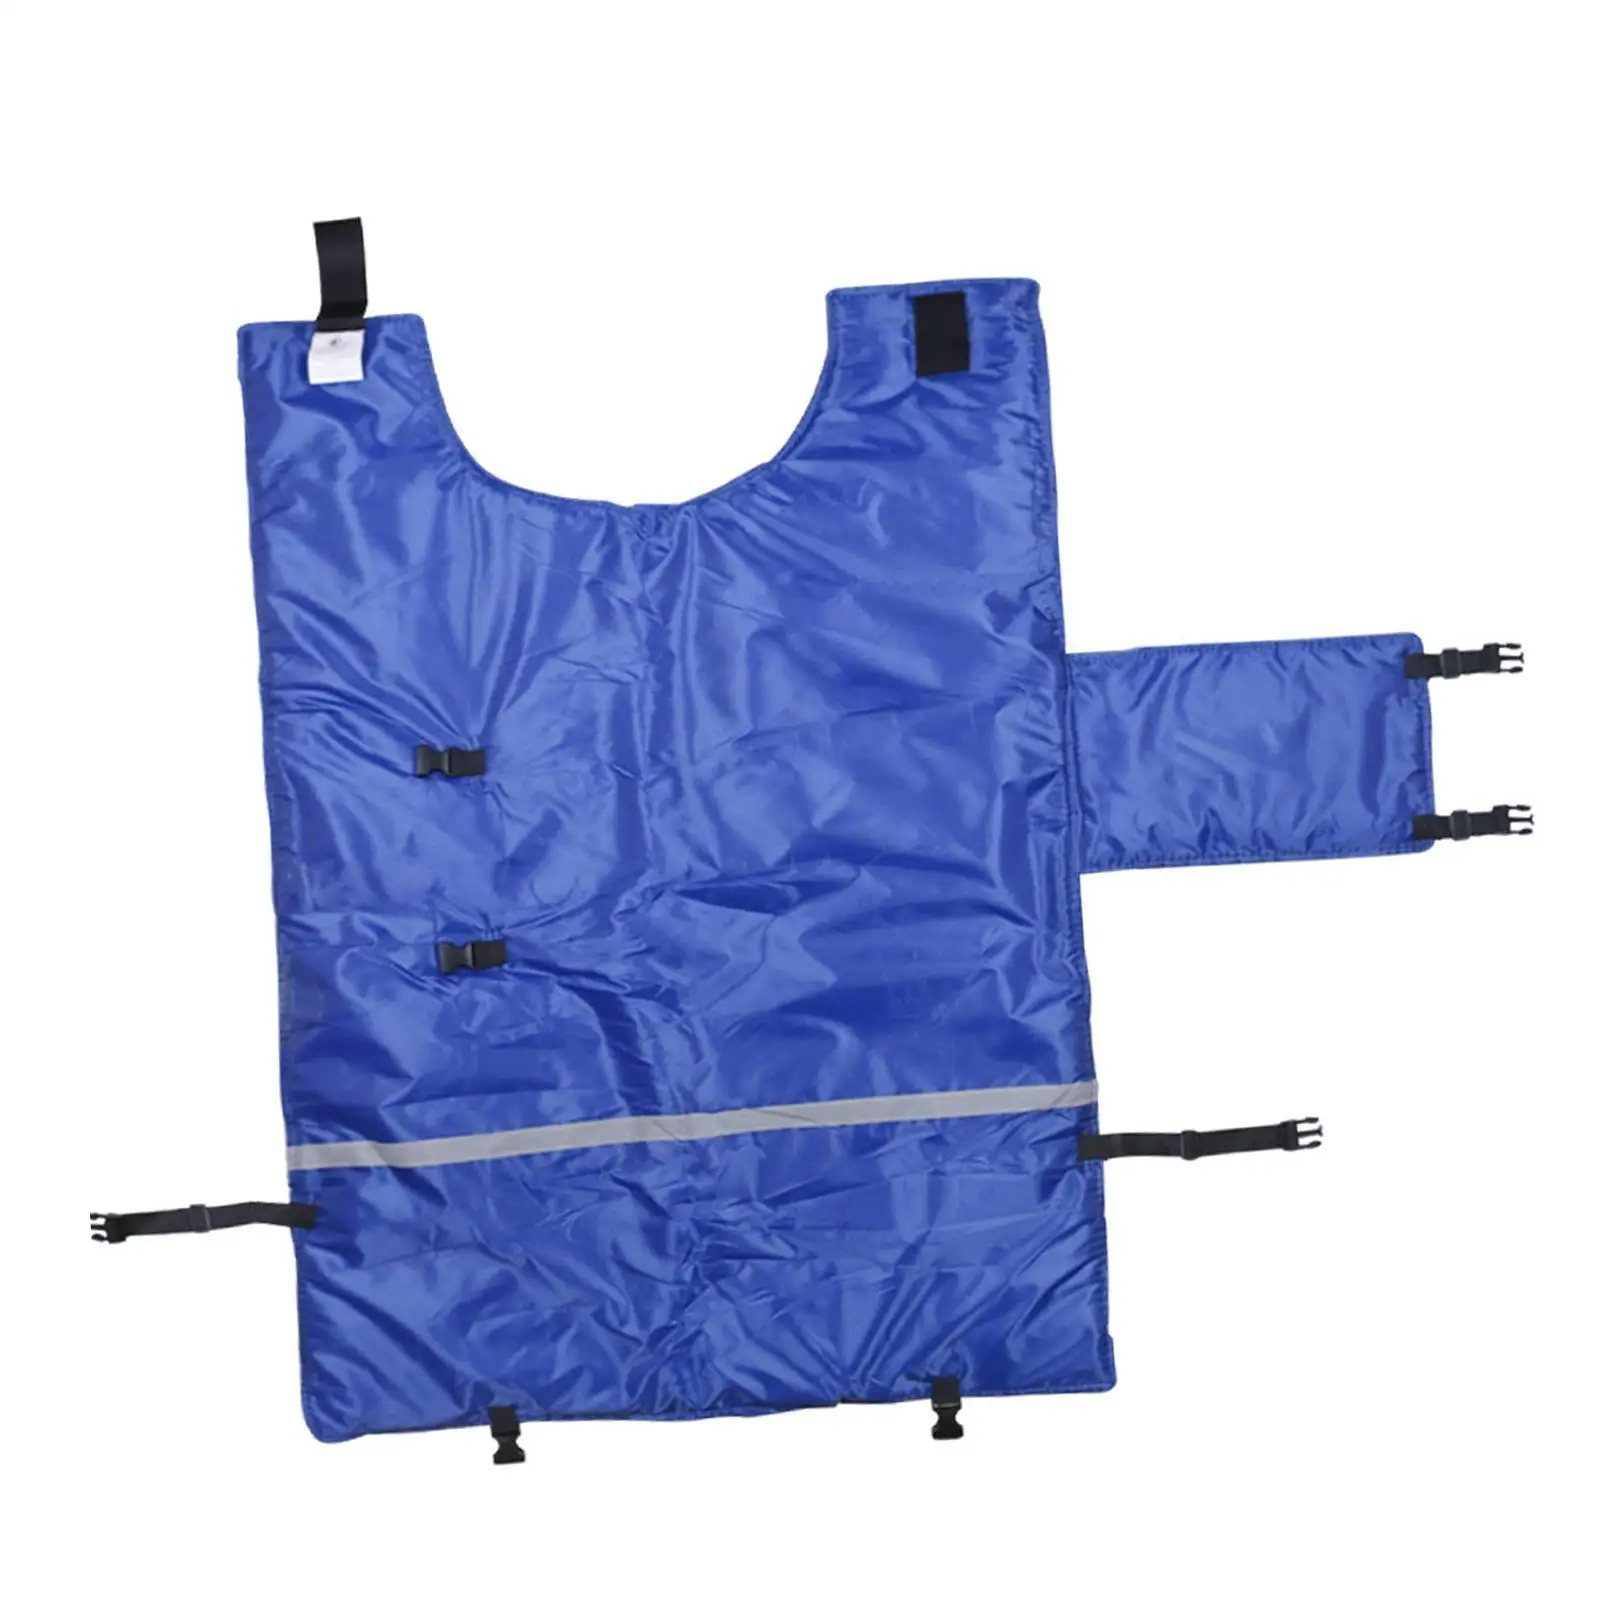 Cow Calf Blanket Adjustable Washable Wear Resistant Vest Cold Protection